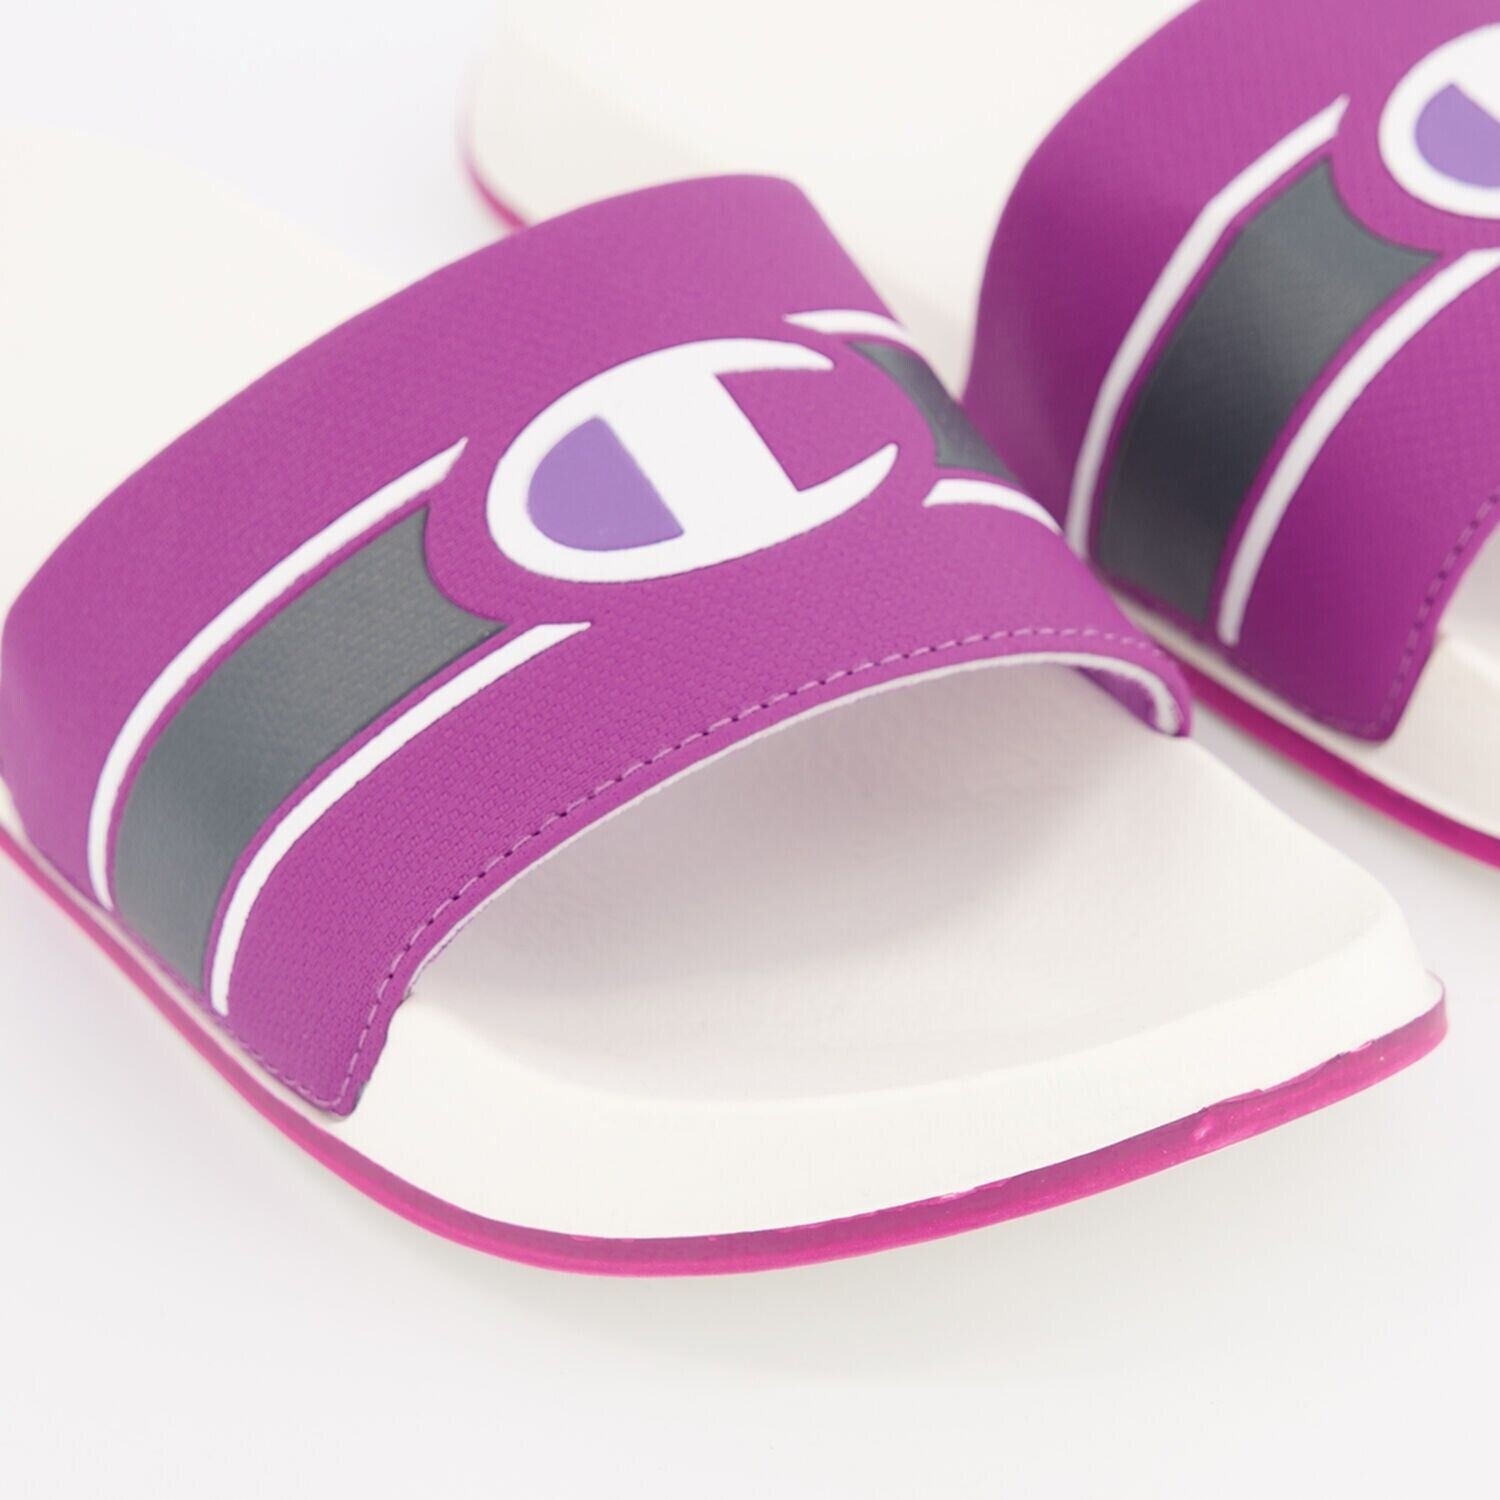 CHAMPION - CONNOR Womens Pool Sliders Summer Sandals, Purple/White, size UK 3